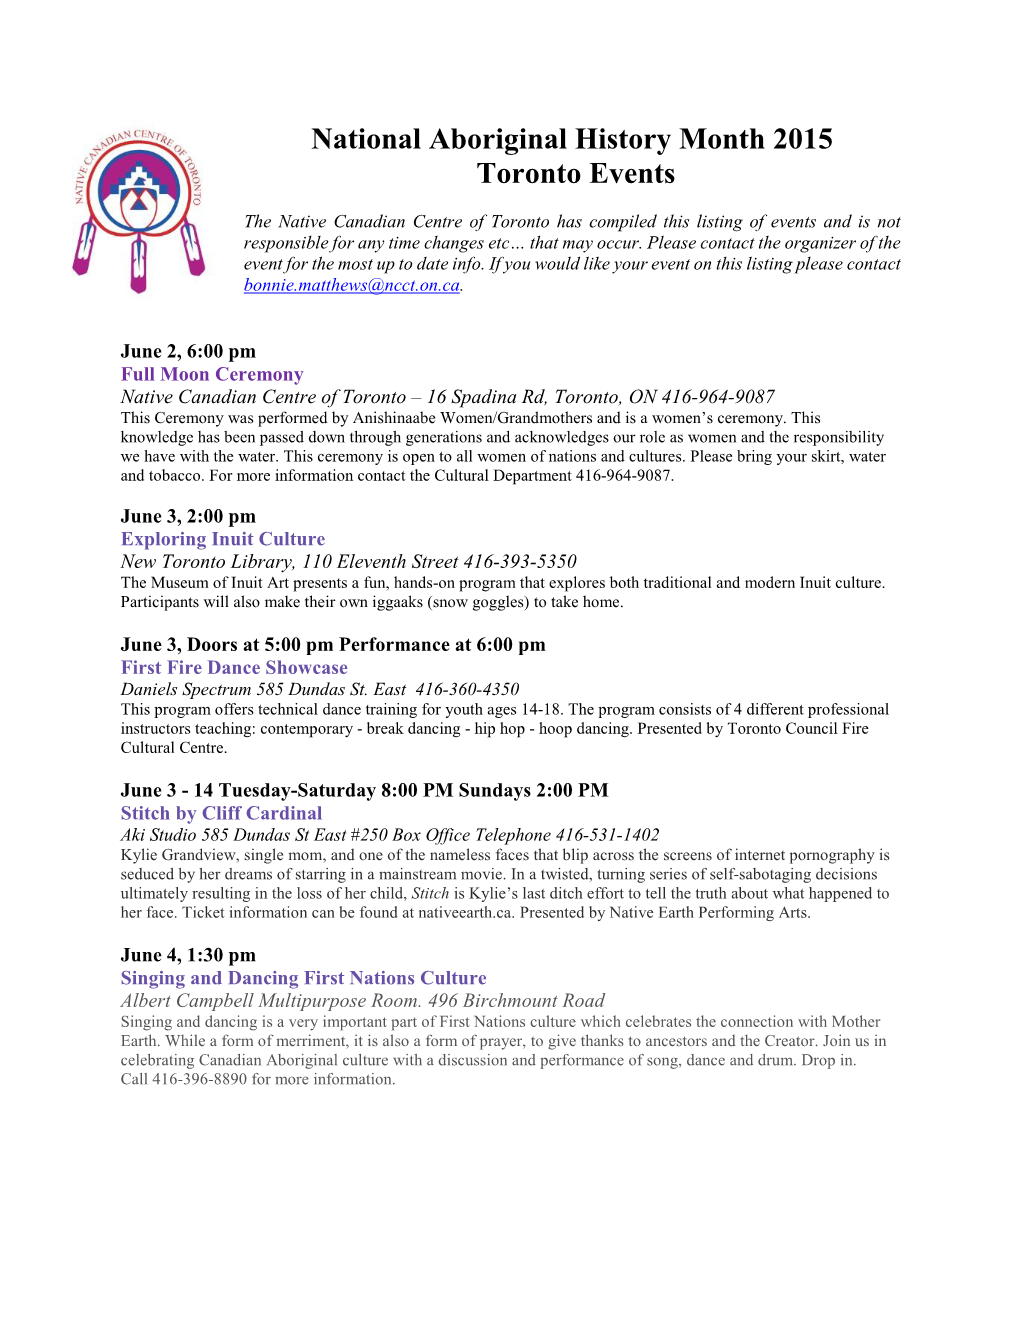 National Aboriginal History Month 2015 Toronto Events